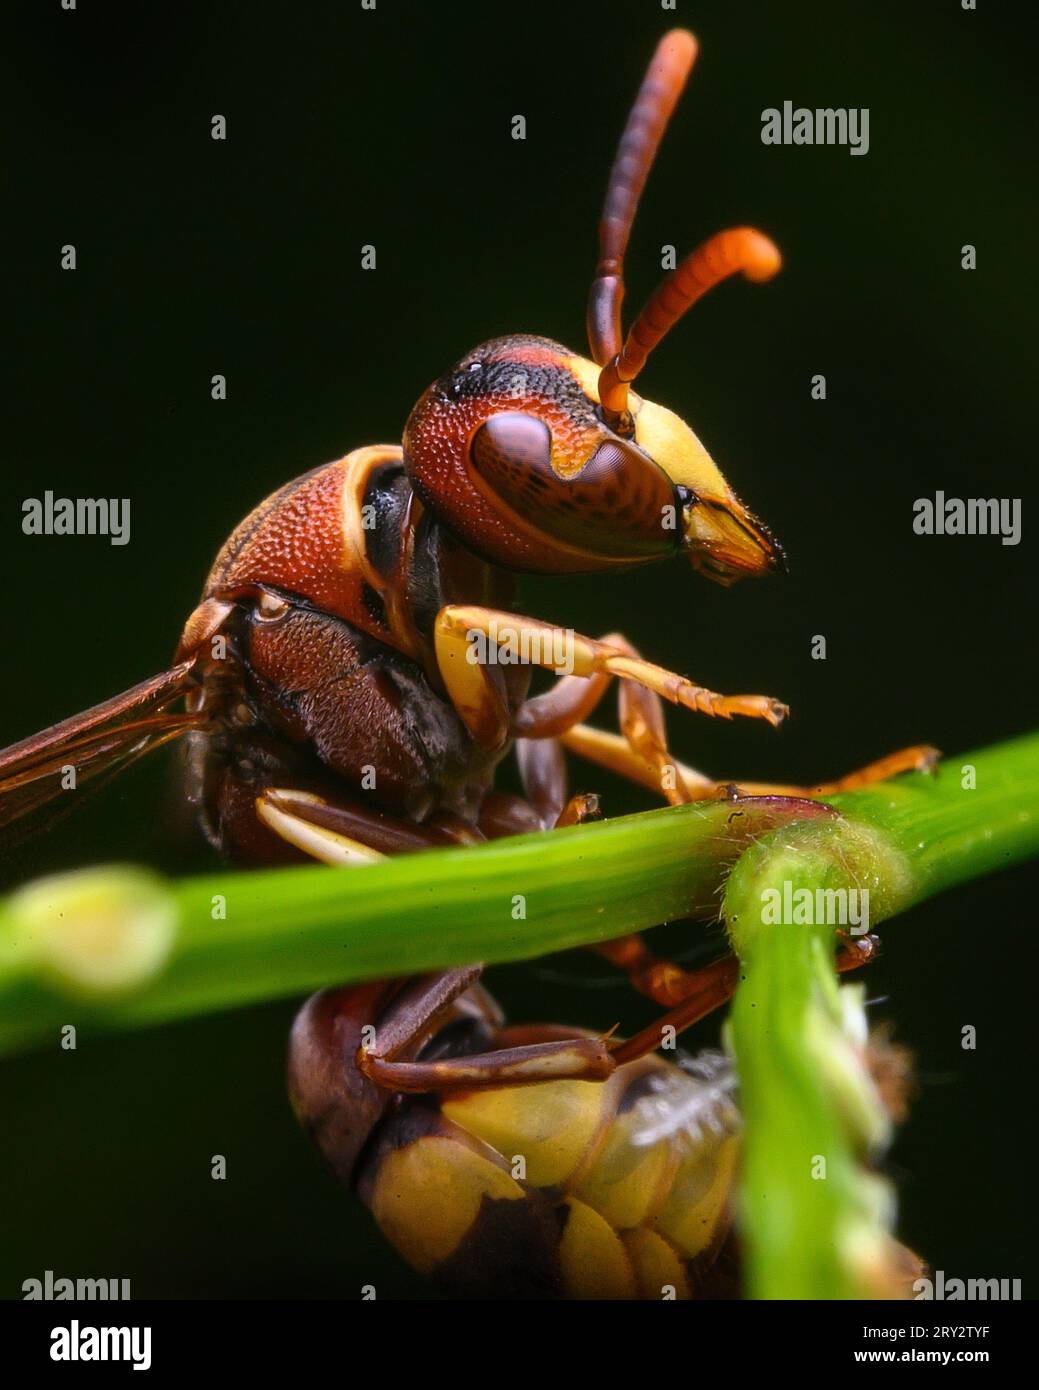 Yellow wasp extreme macro image with crisp details Stock Photo